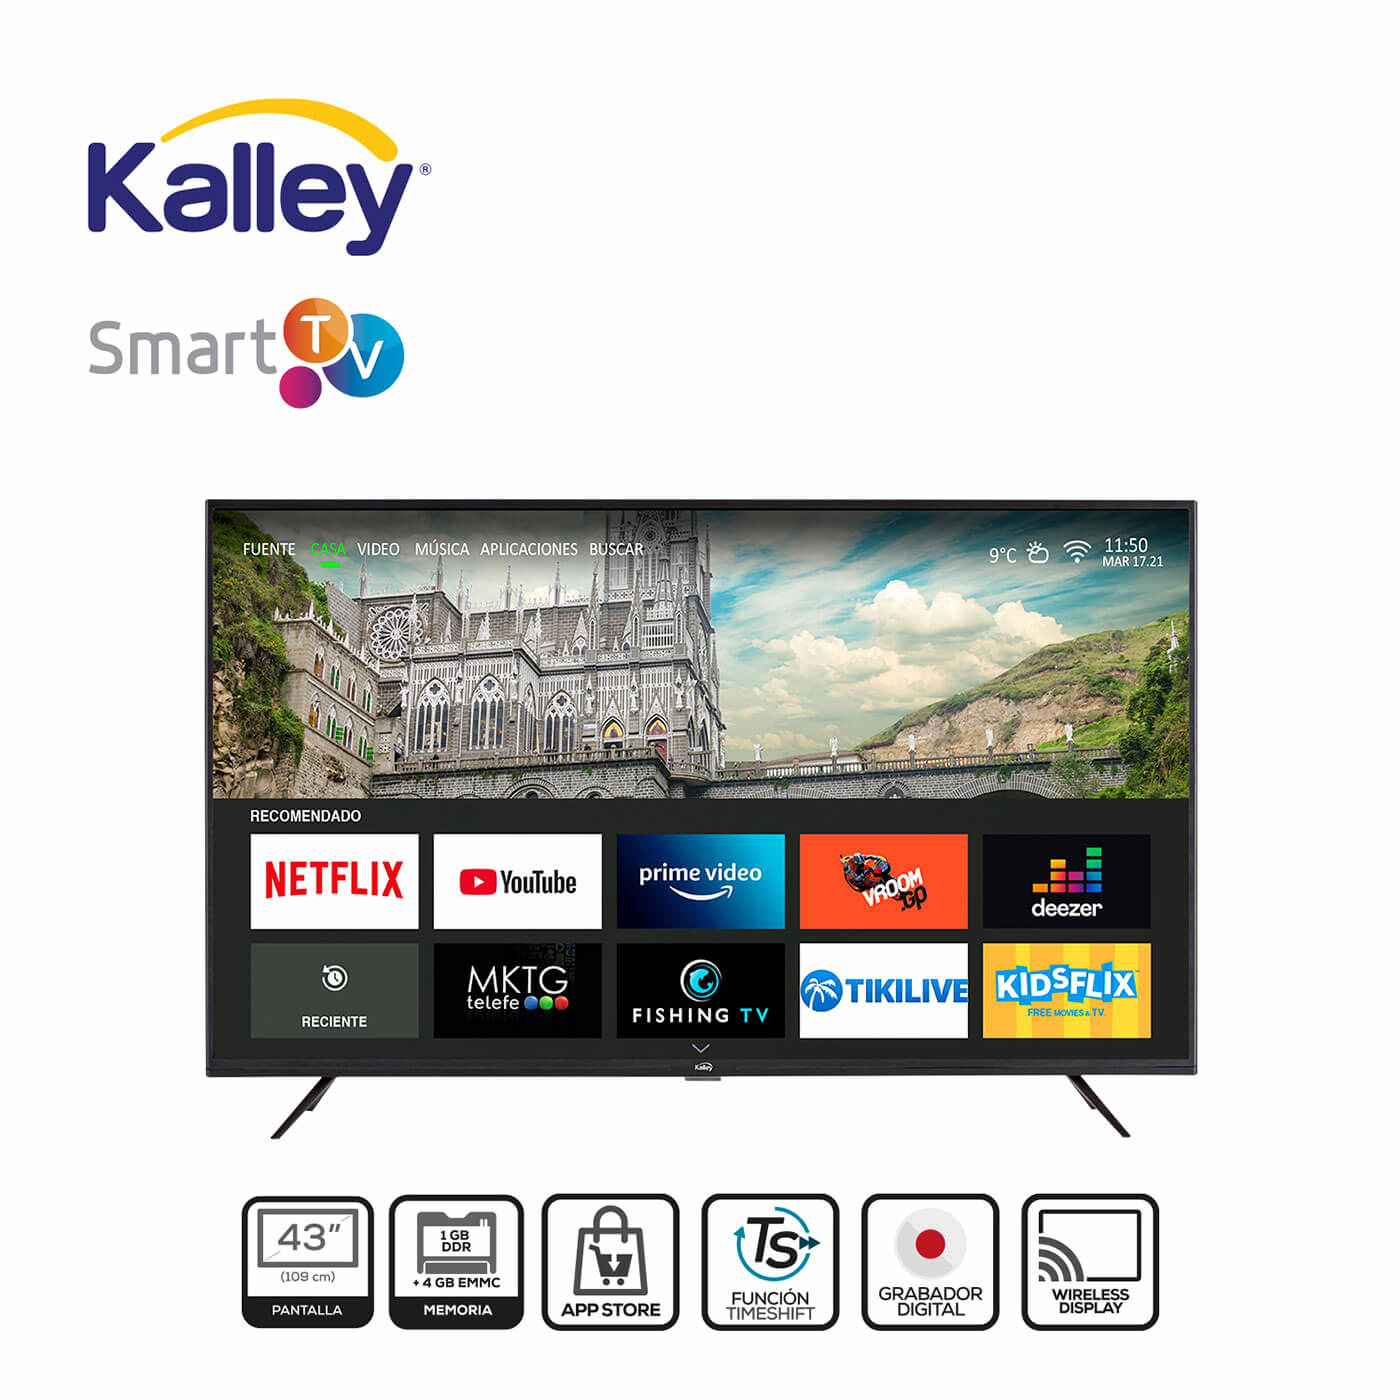 TV KALLEY 43" Pulgadas 109 cm K-STV43FHDT FHD LED Smart TV